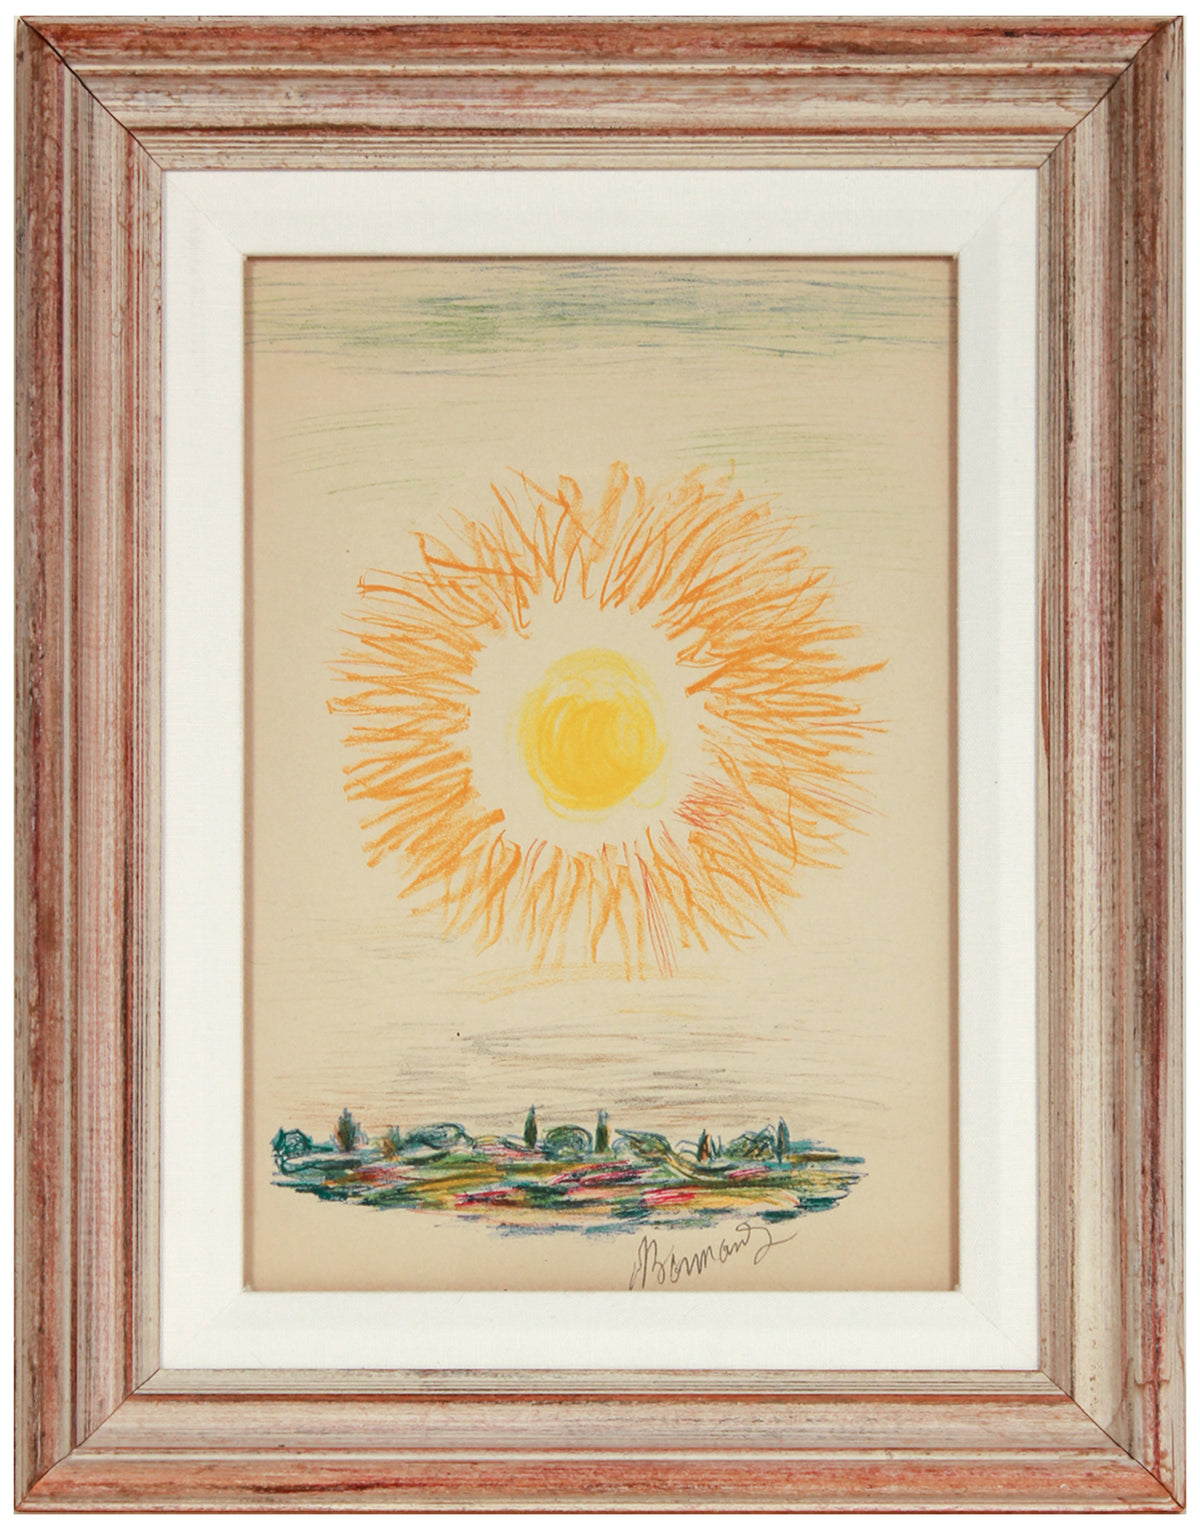 &lt;I&gt;Le soleil (The Sun)&lt;/i&gt; &lt;br&gt;1940s Lithograph &lt;br&gt;&lt;br&gt;#B1623